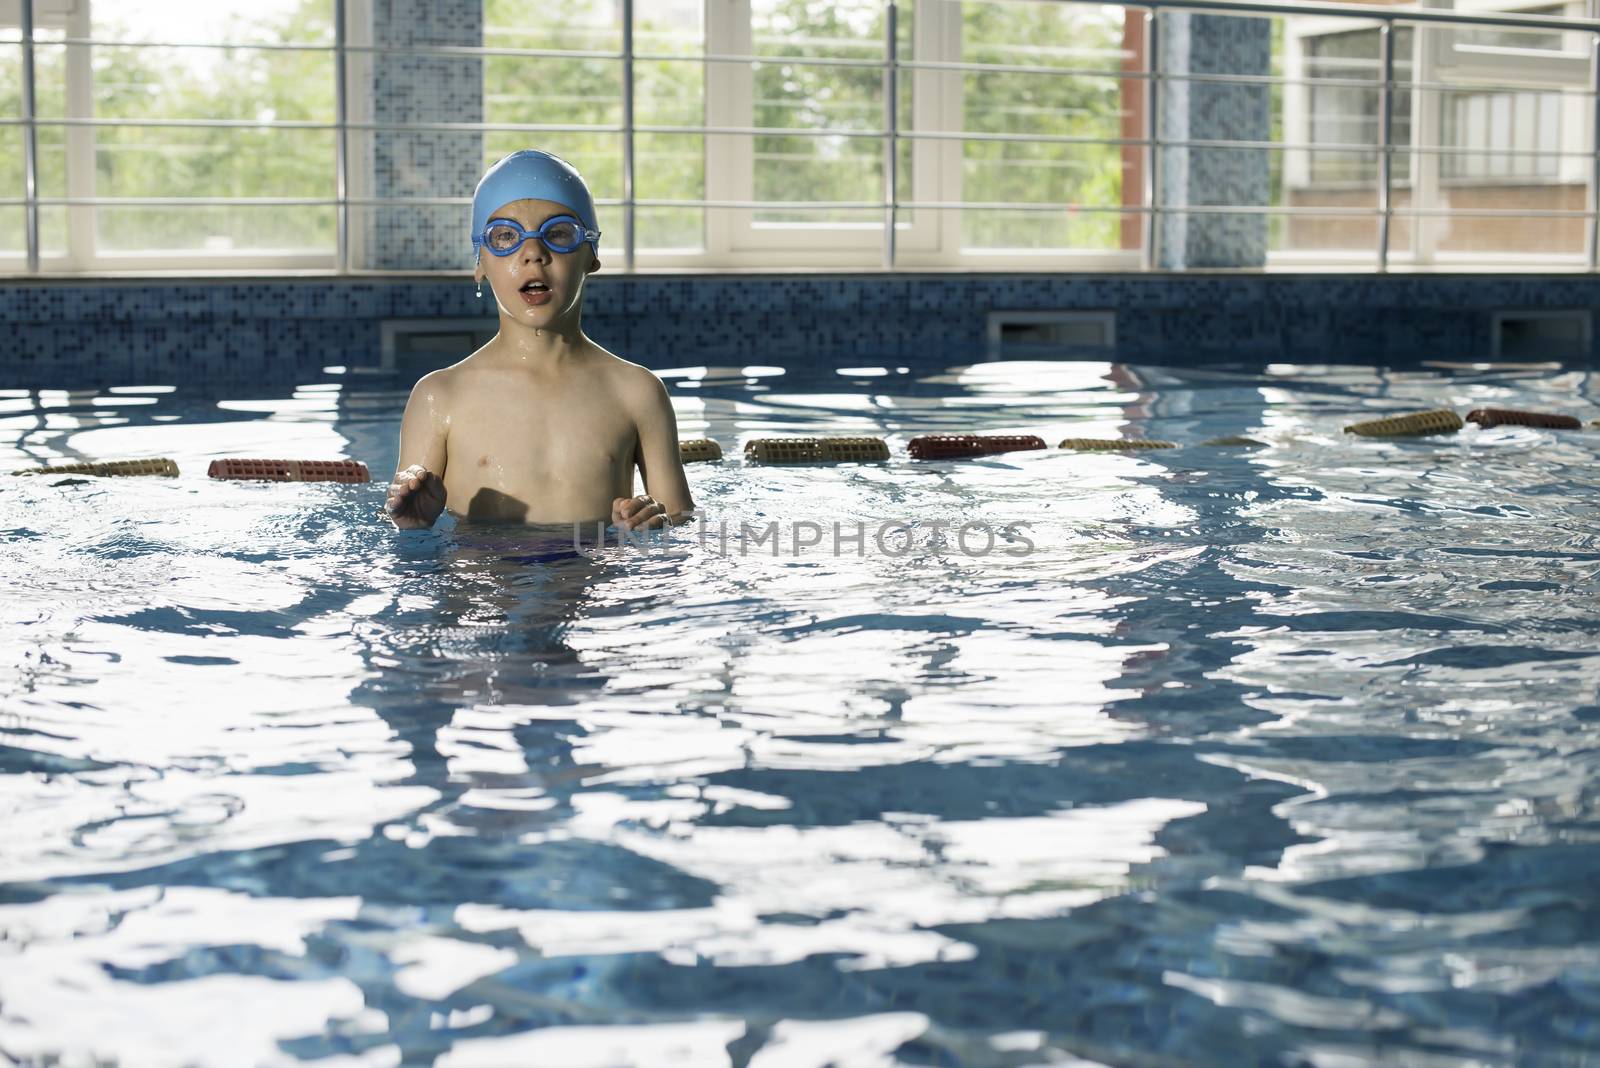 Child in swimming pool by deyan_georgiev